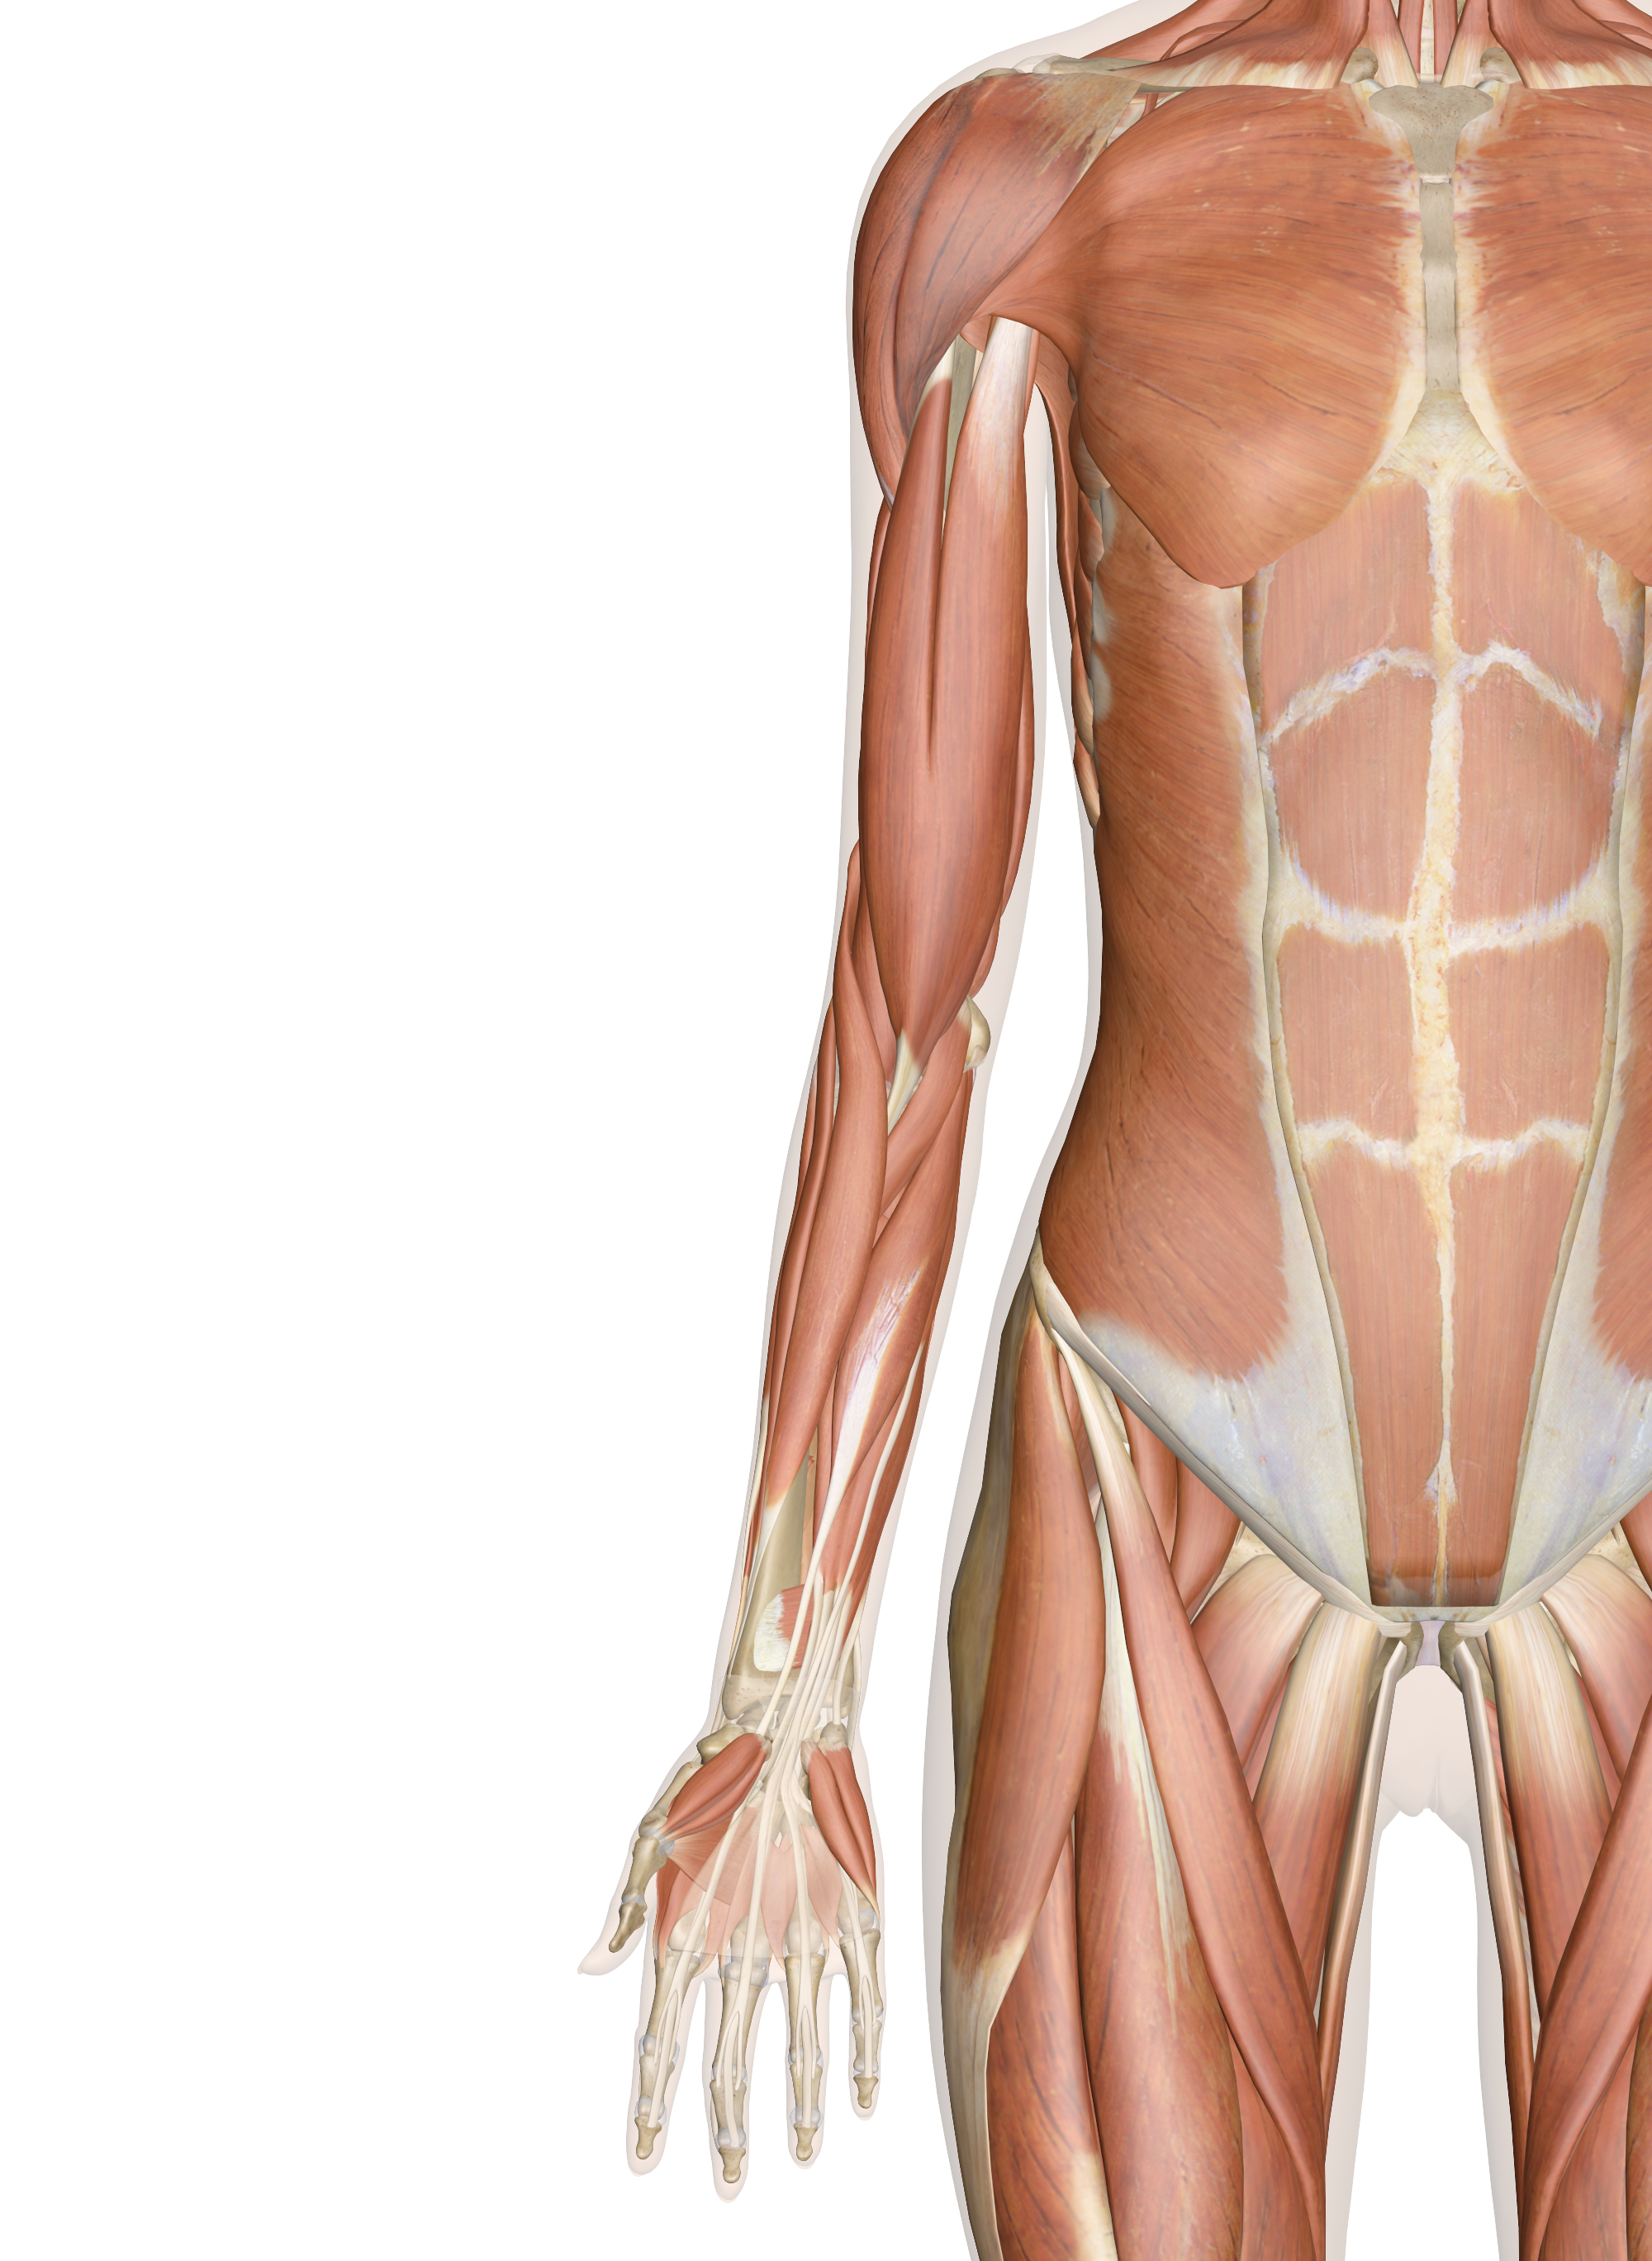 Arm Muscle Diagram Arm Muscle Anatomy Diagram Wiring Diagram Post